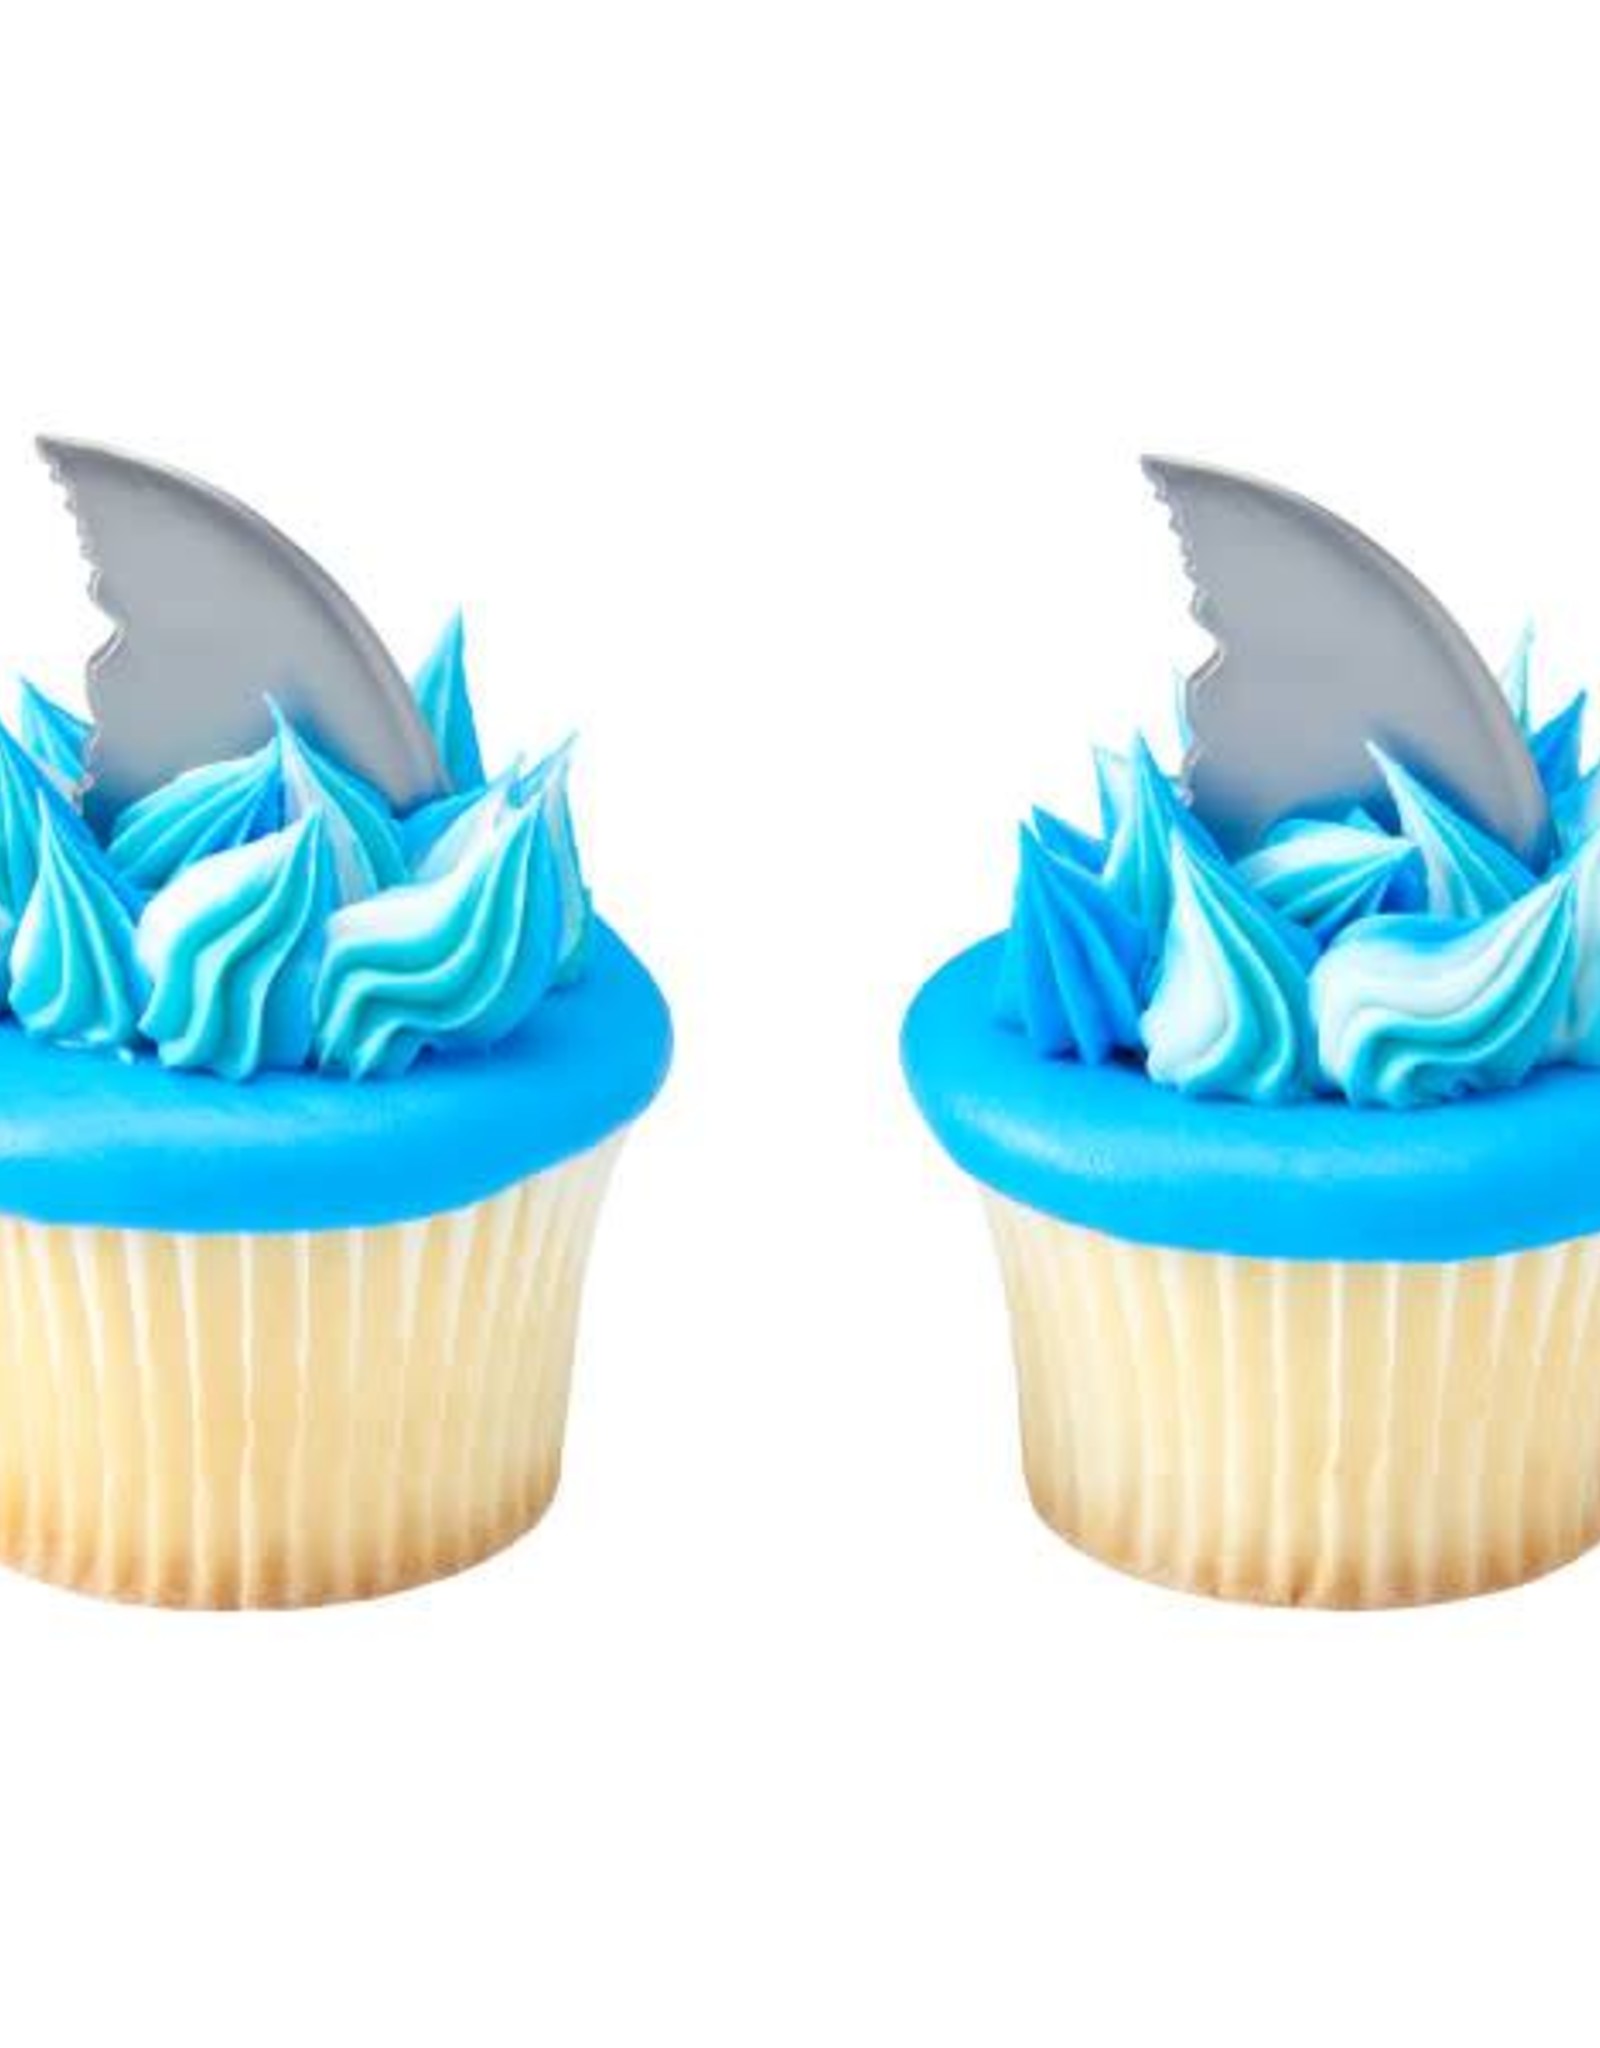 Shark Fin Cupcake Picks (12/pkg)